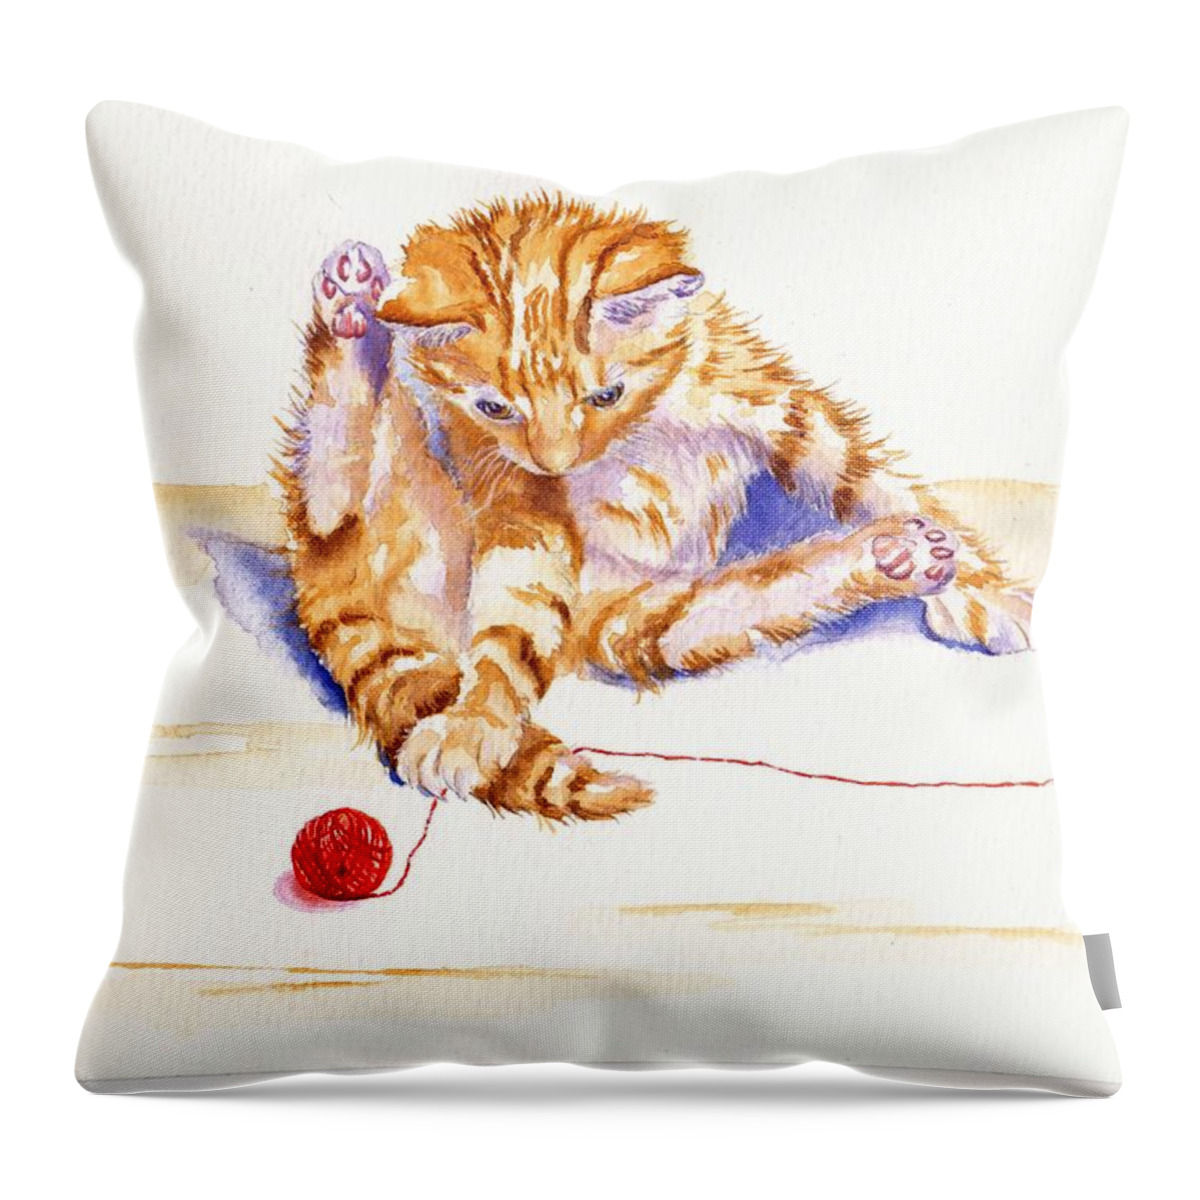 Kitten Throw Pillow featuring the painting Kitten Interrupted by Debra Hall